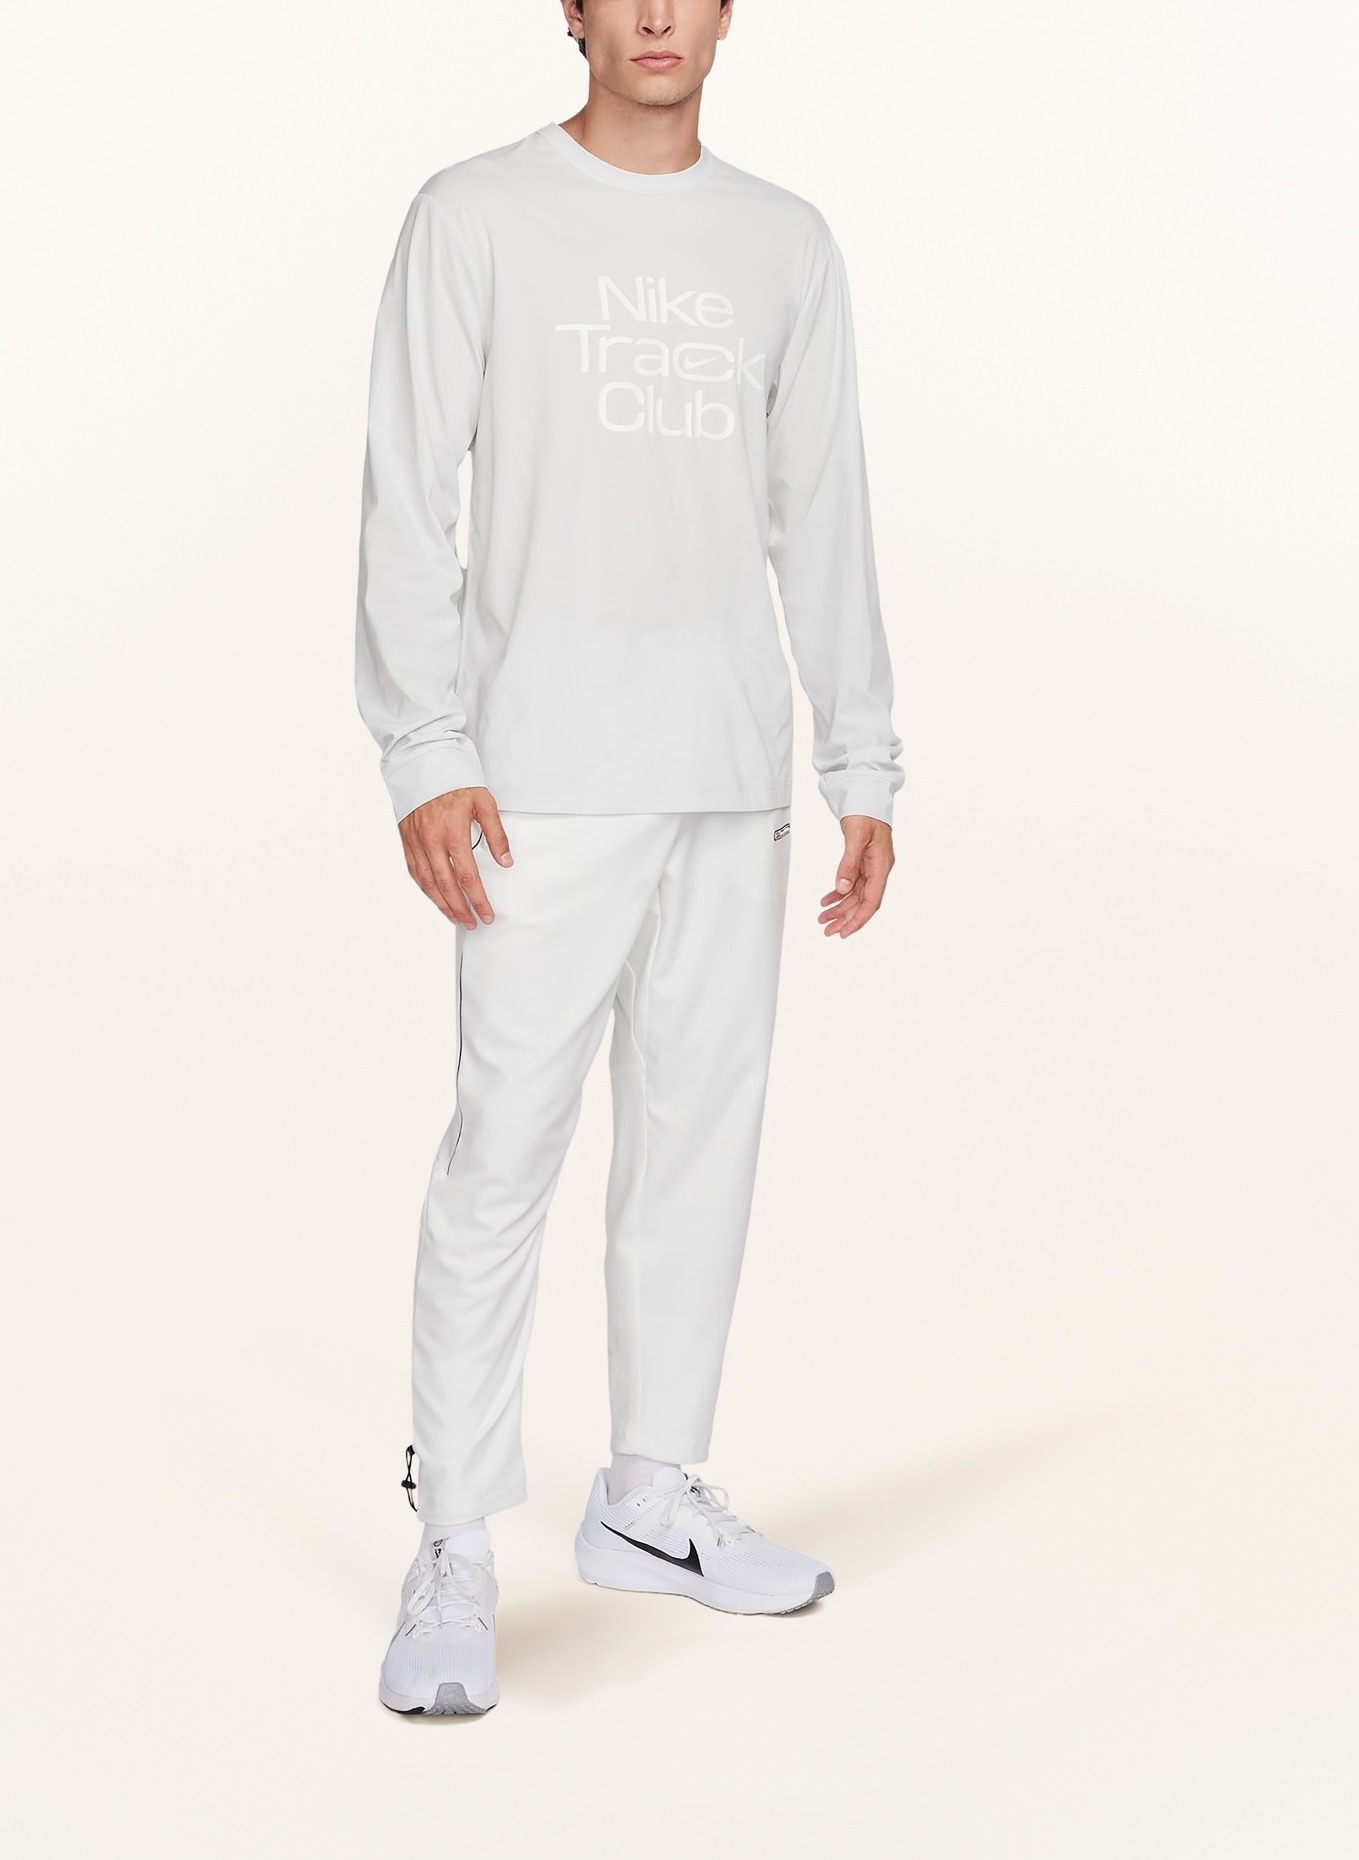 Nike Running shirt TRACK CLUB, Color: LIGHT GRAY/ WHITE (Image 2)